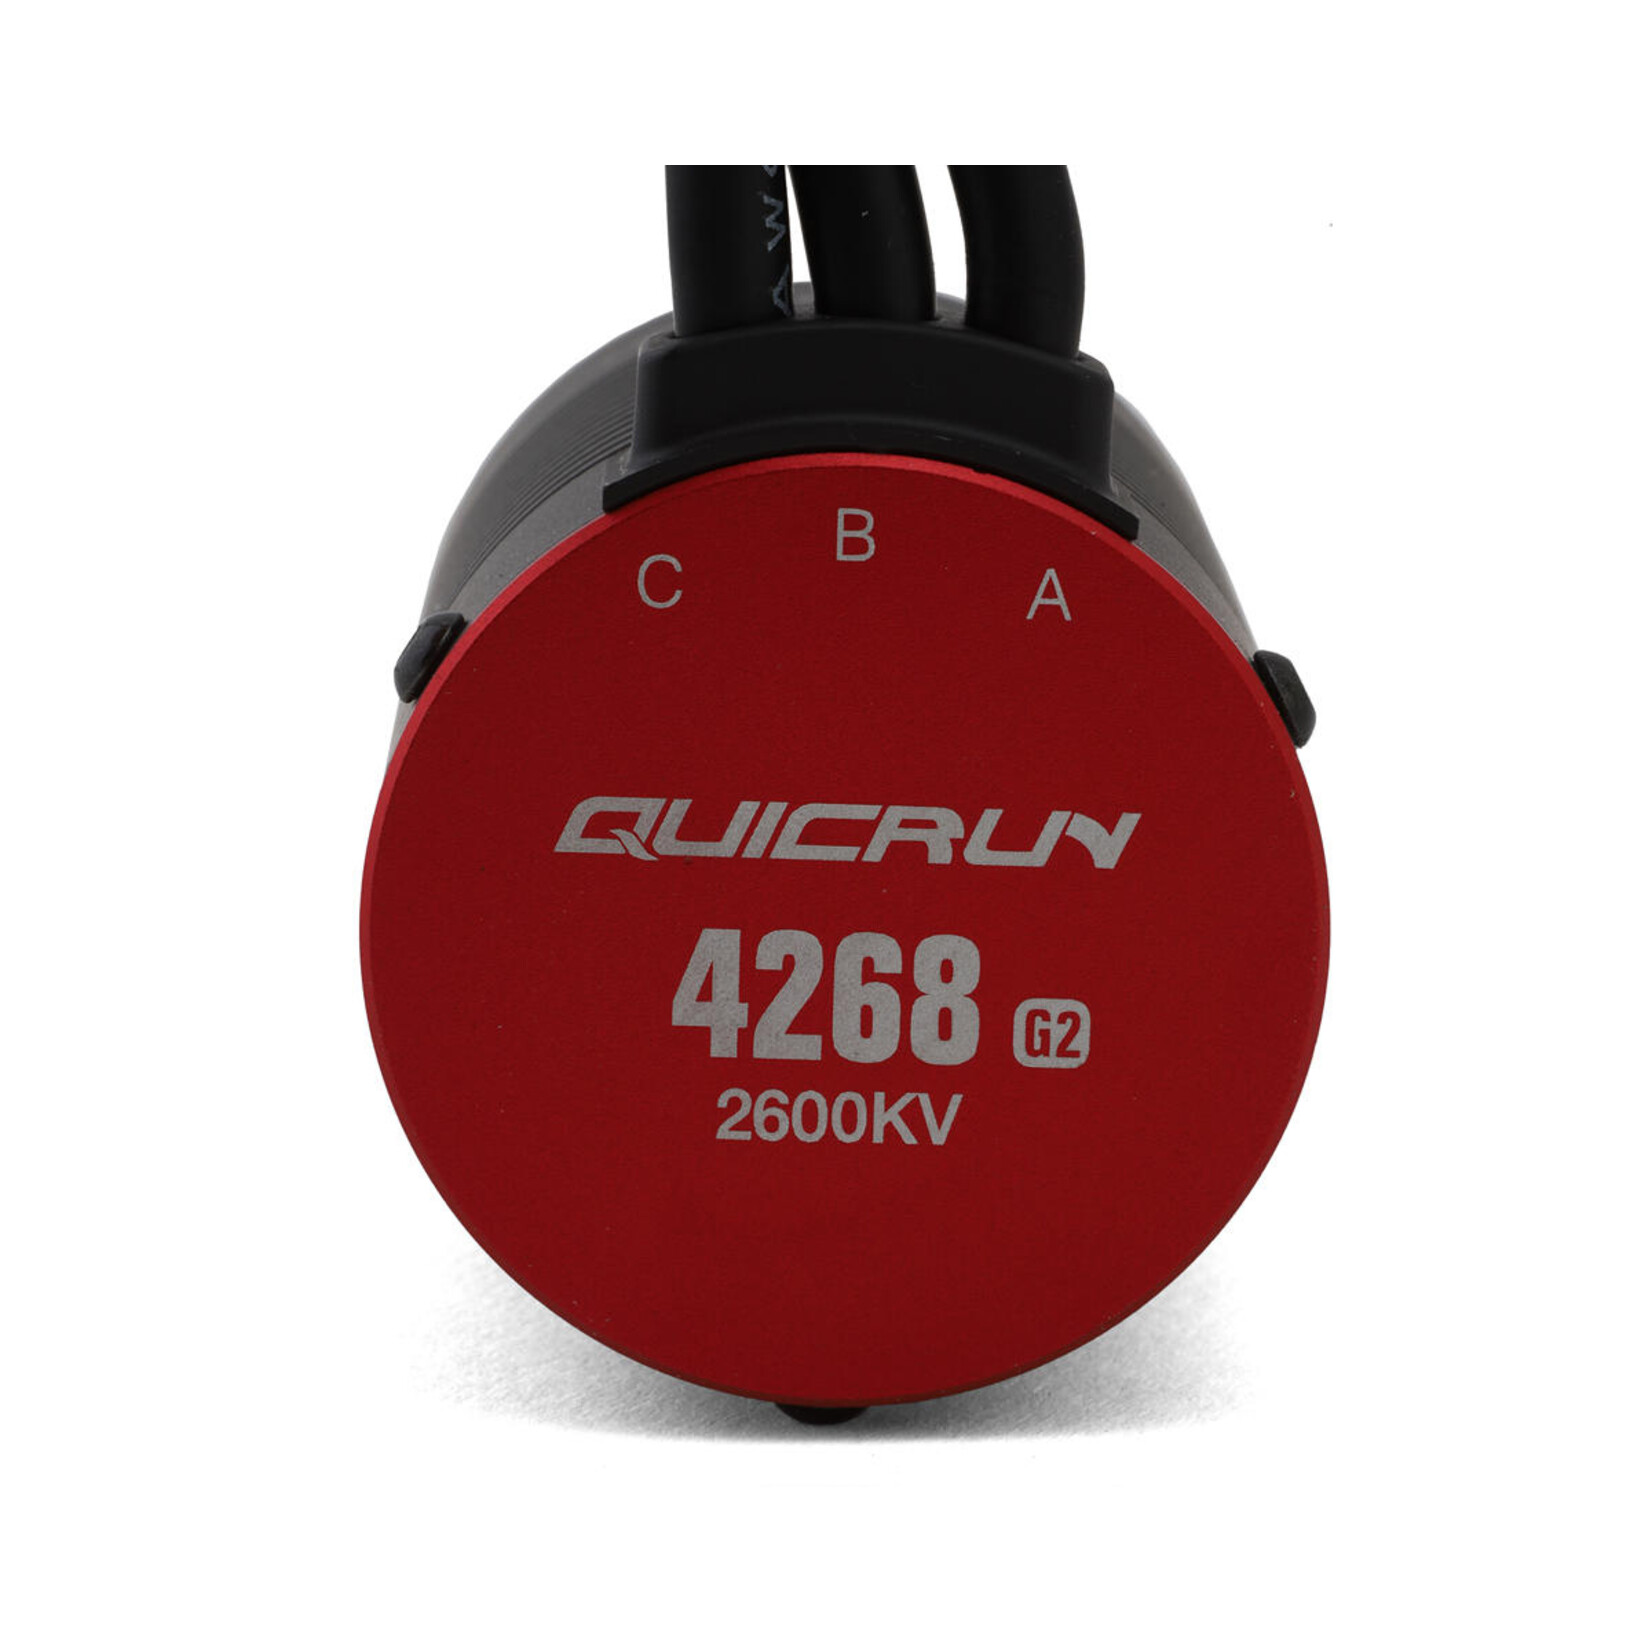 Hobbywing Hobbywing QuicRun 4268SL Sensorless Brushless Motor (2600kV) #30404600